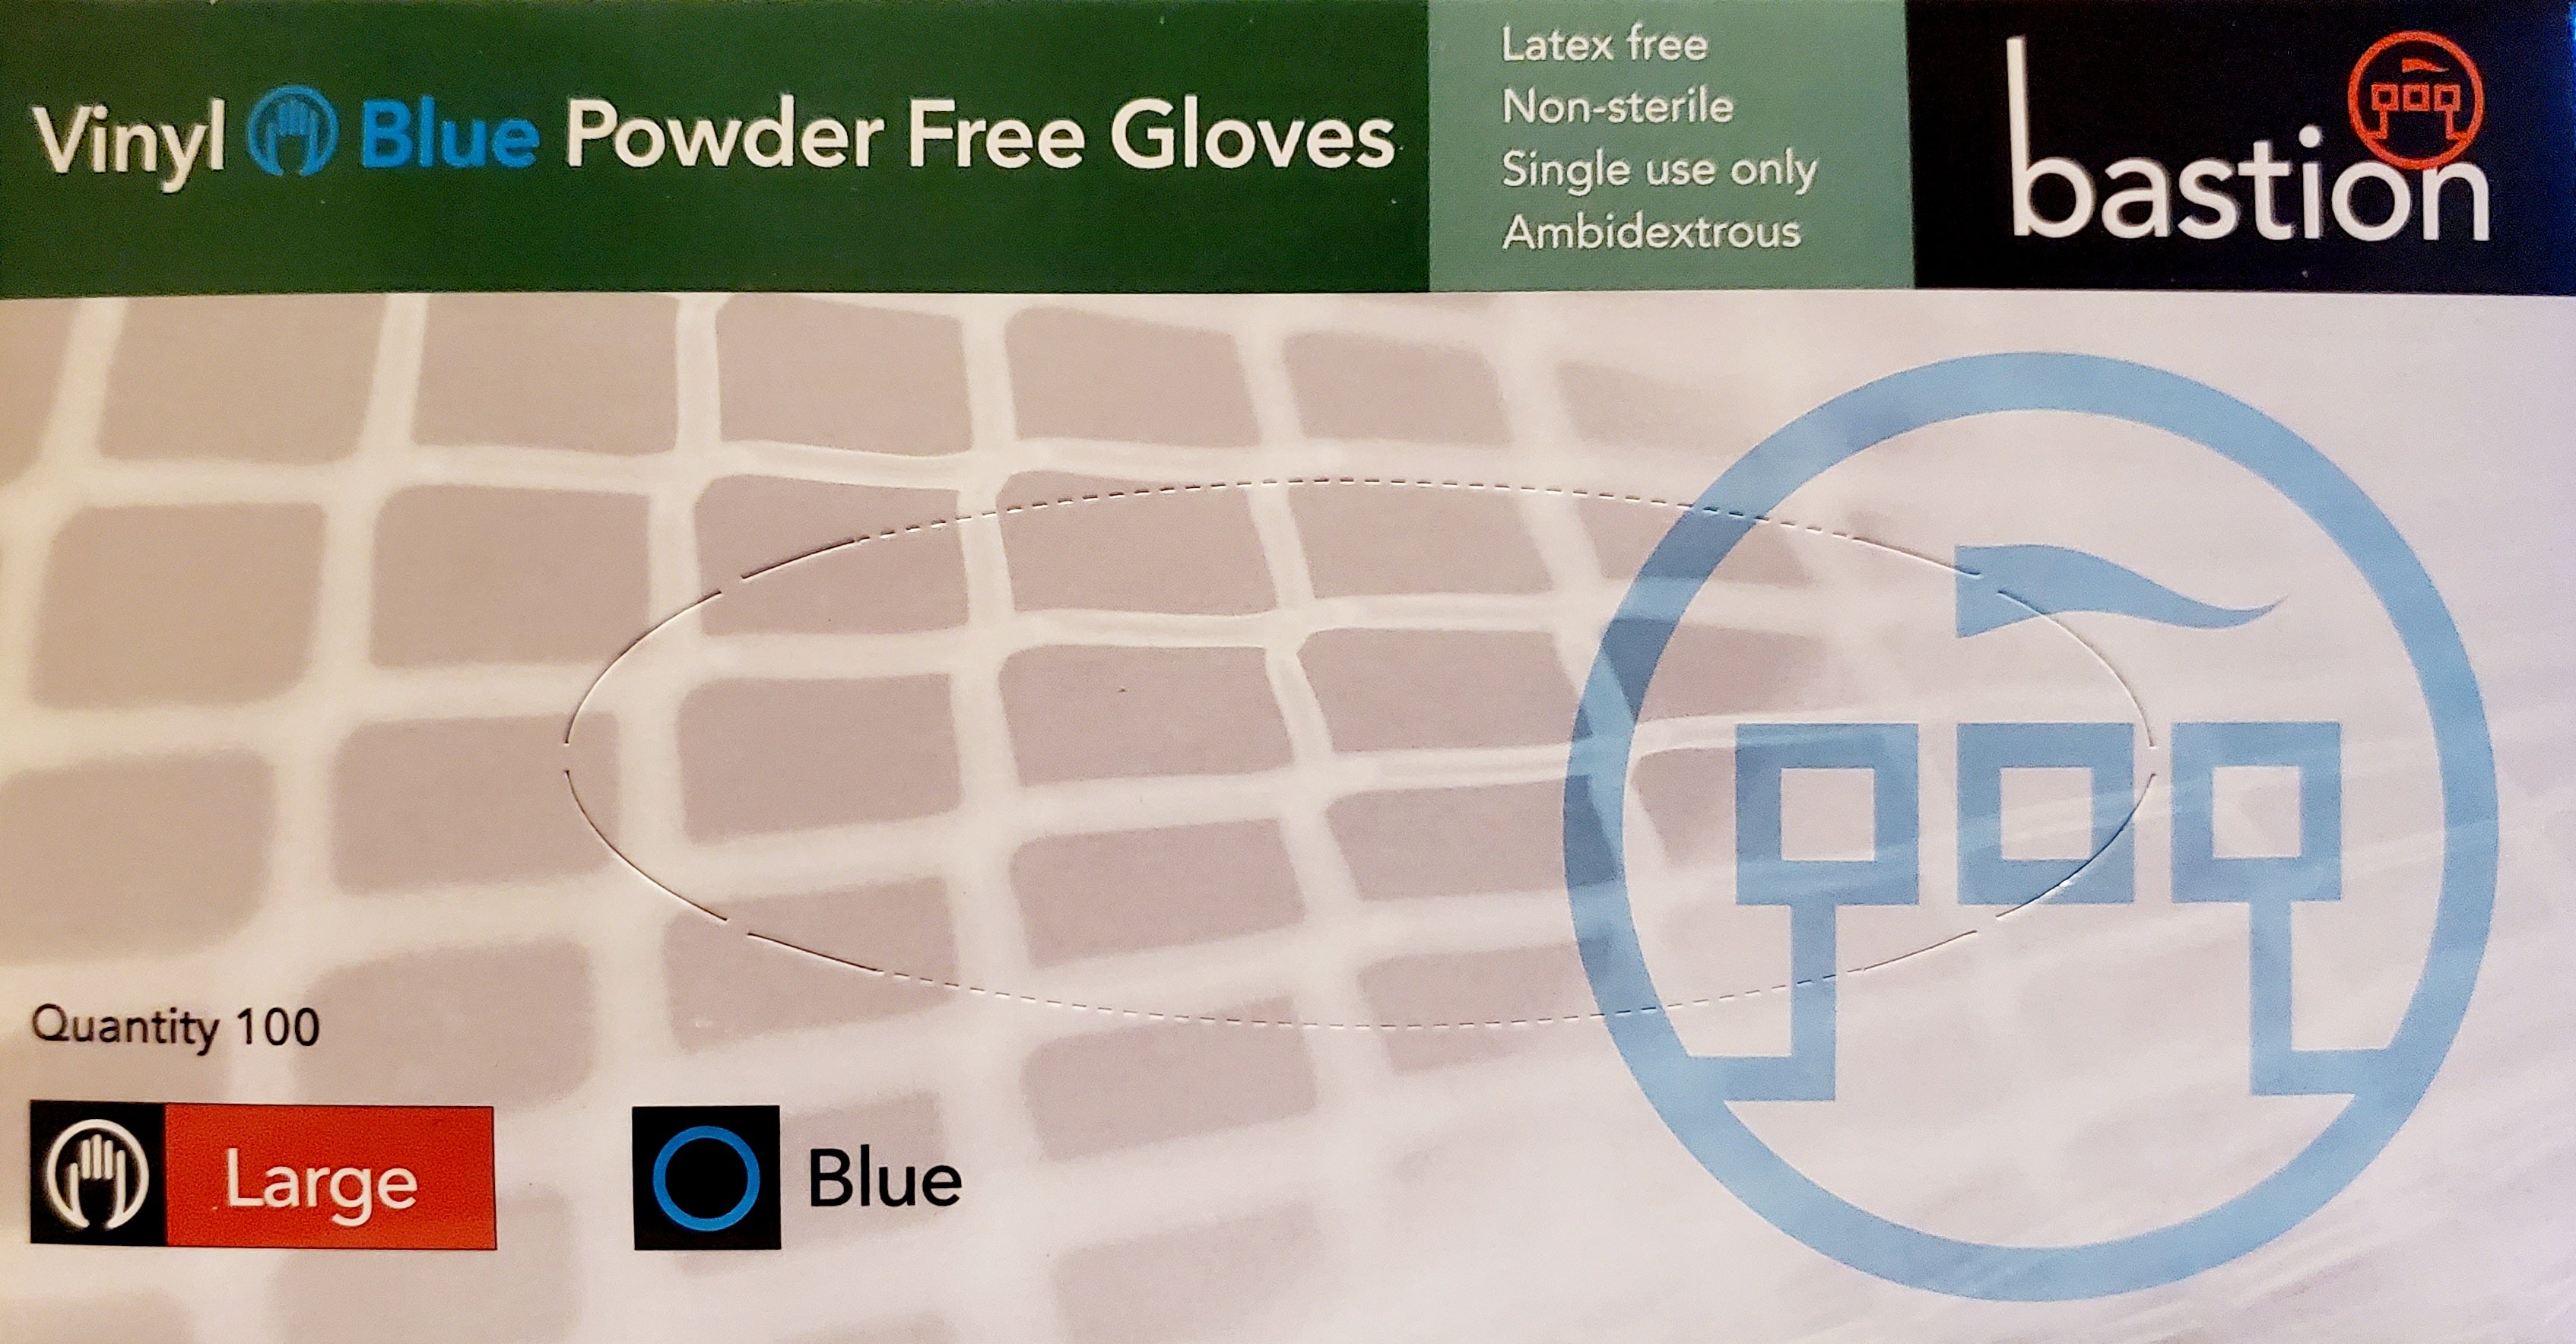 Bastion Vinyl Blue Gloves 100pcs Powder & Latex Free